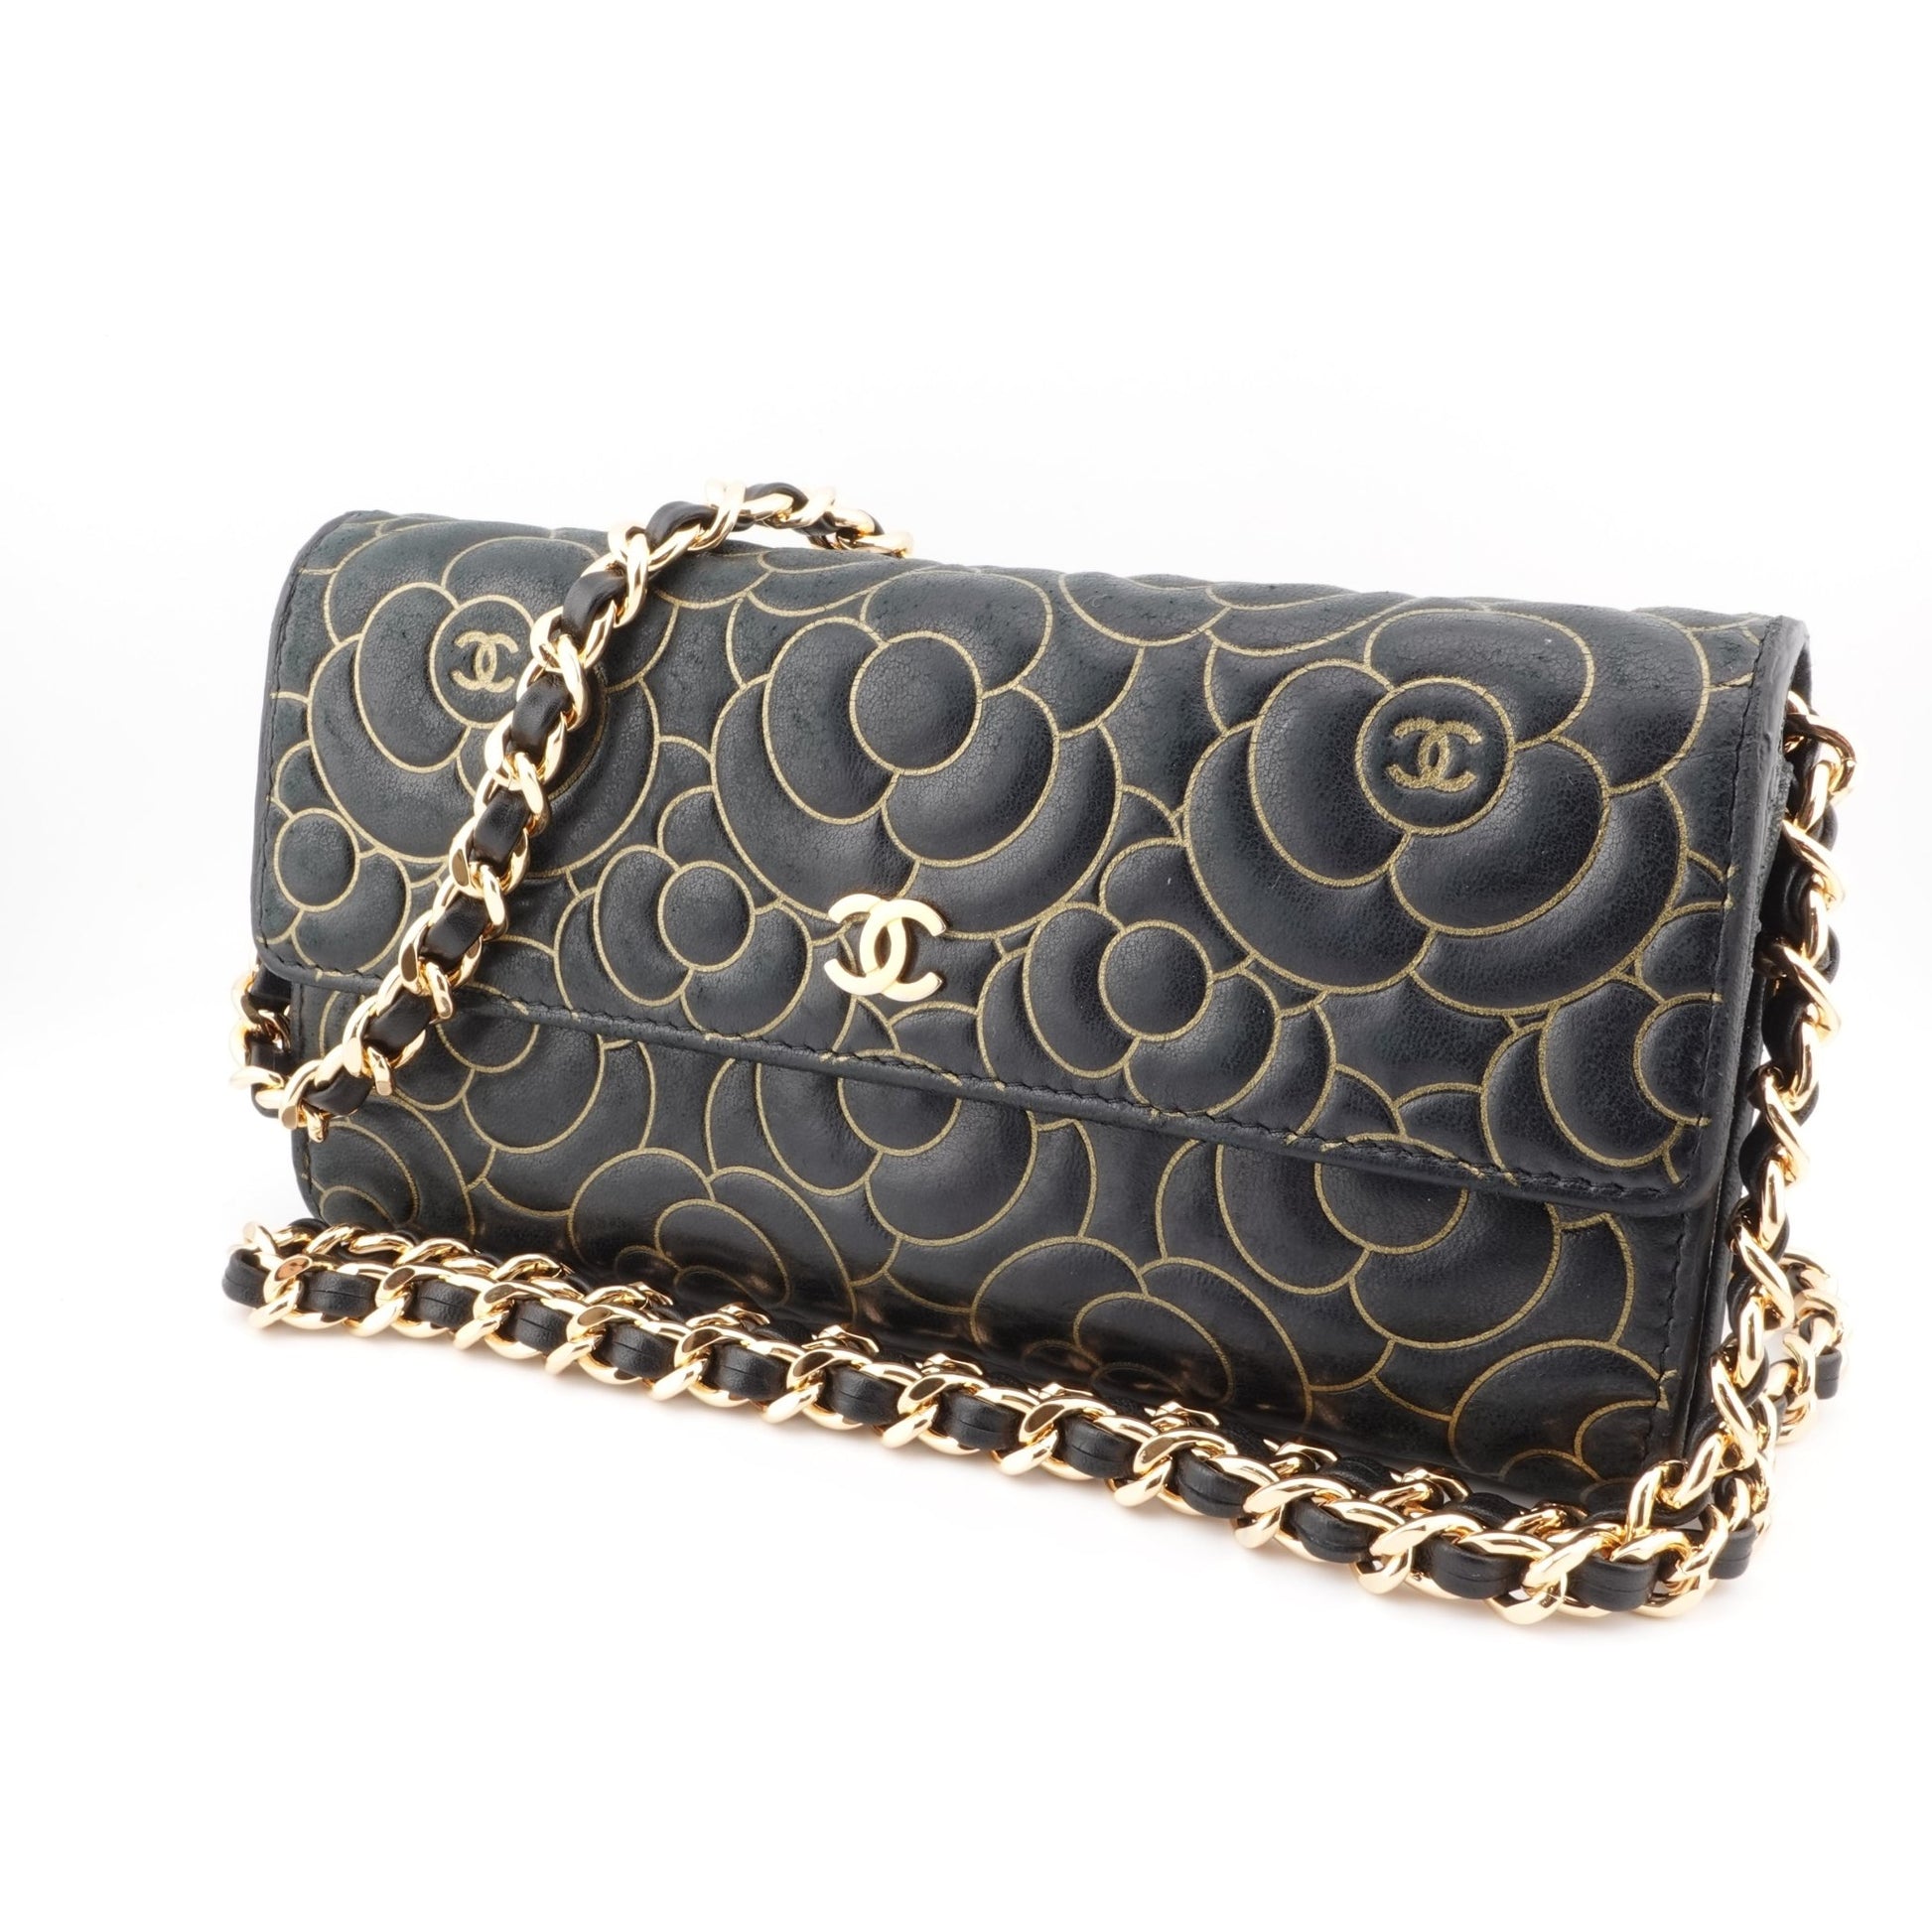 CHANEL Lambskin Camellia Long Flap Wallet on Chain - Bag Envy